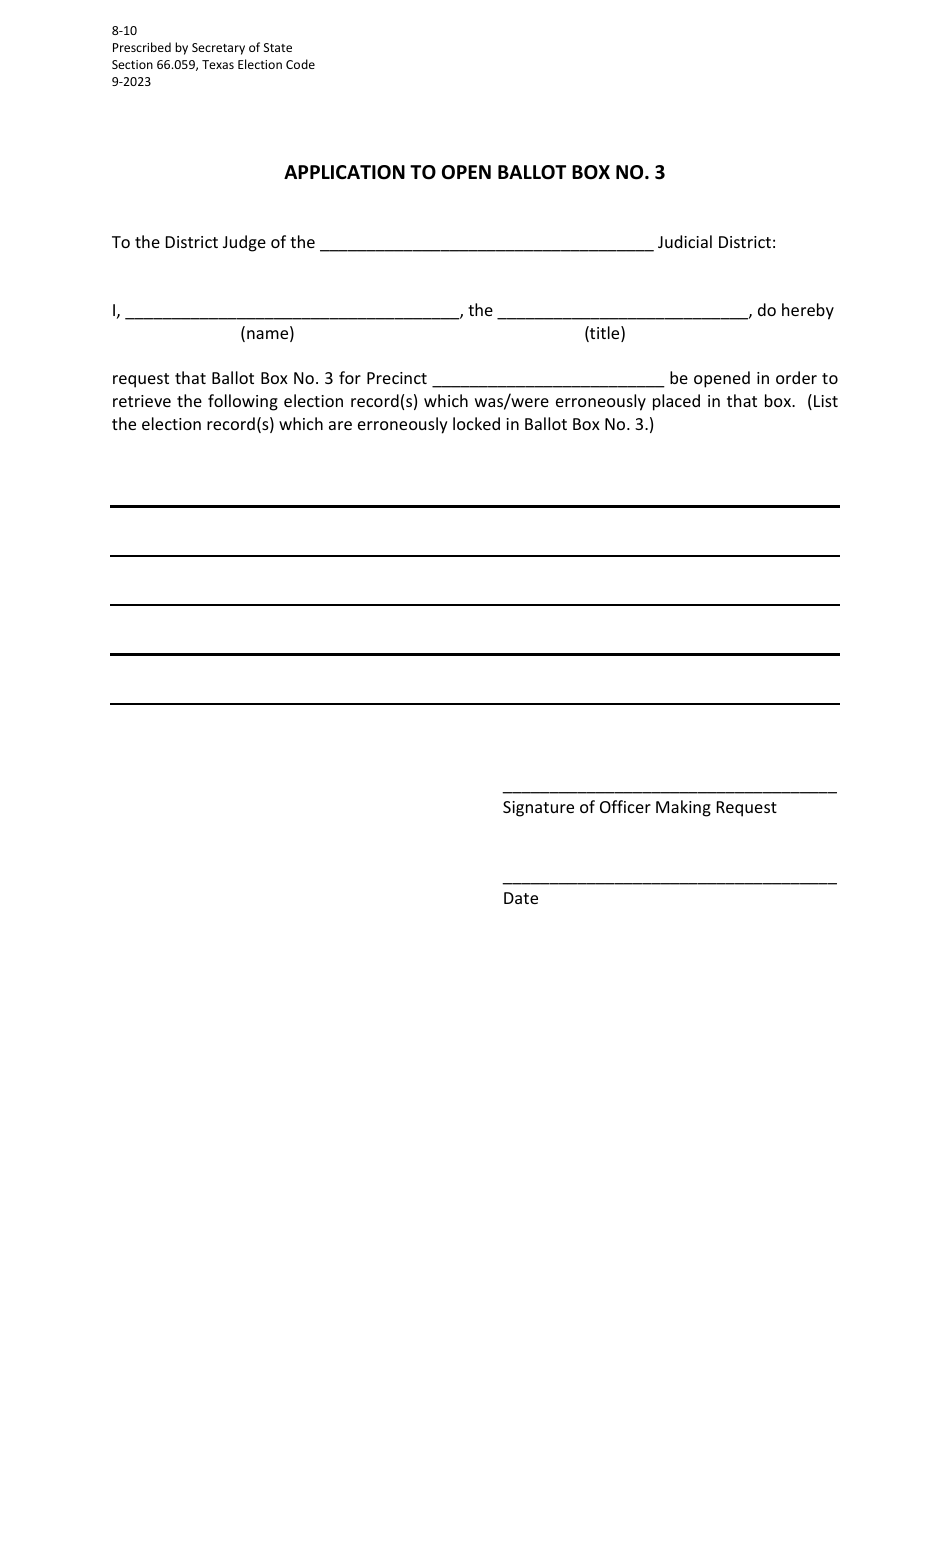 Form 8-10 Application to Open Ballot Box No. 3 - Texas, Page 1